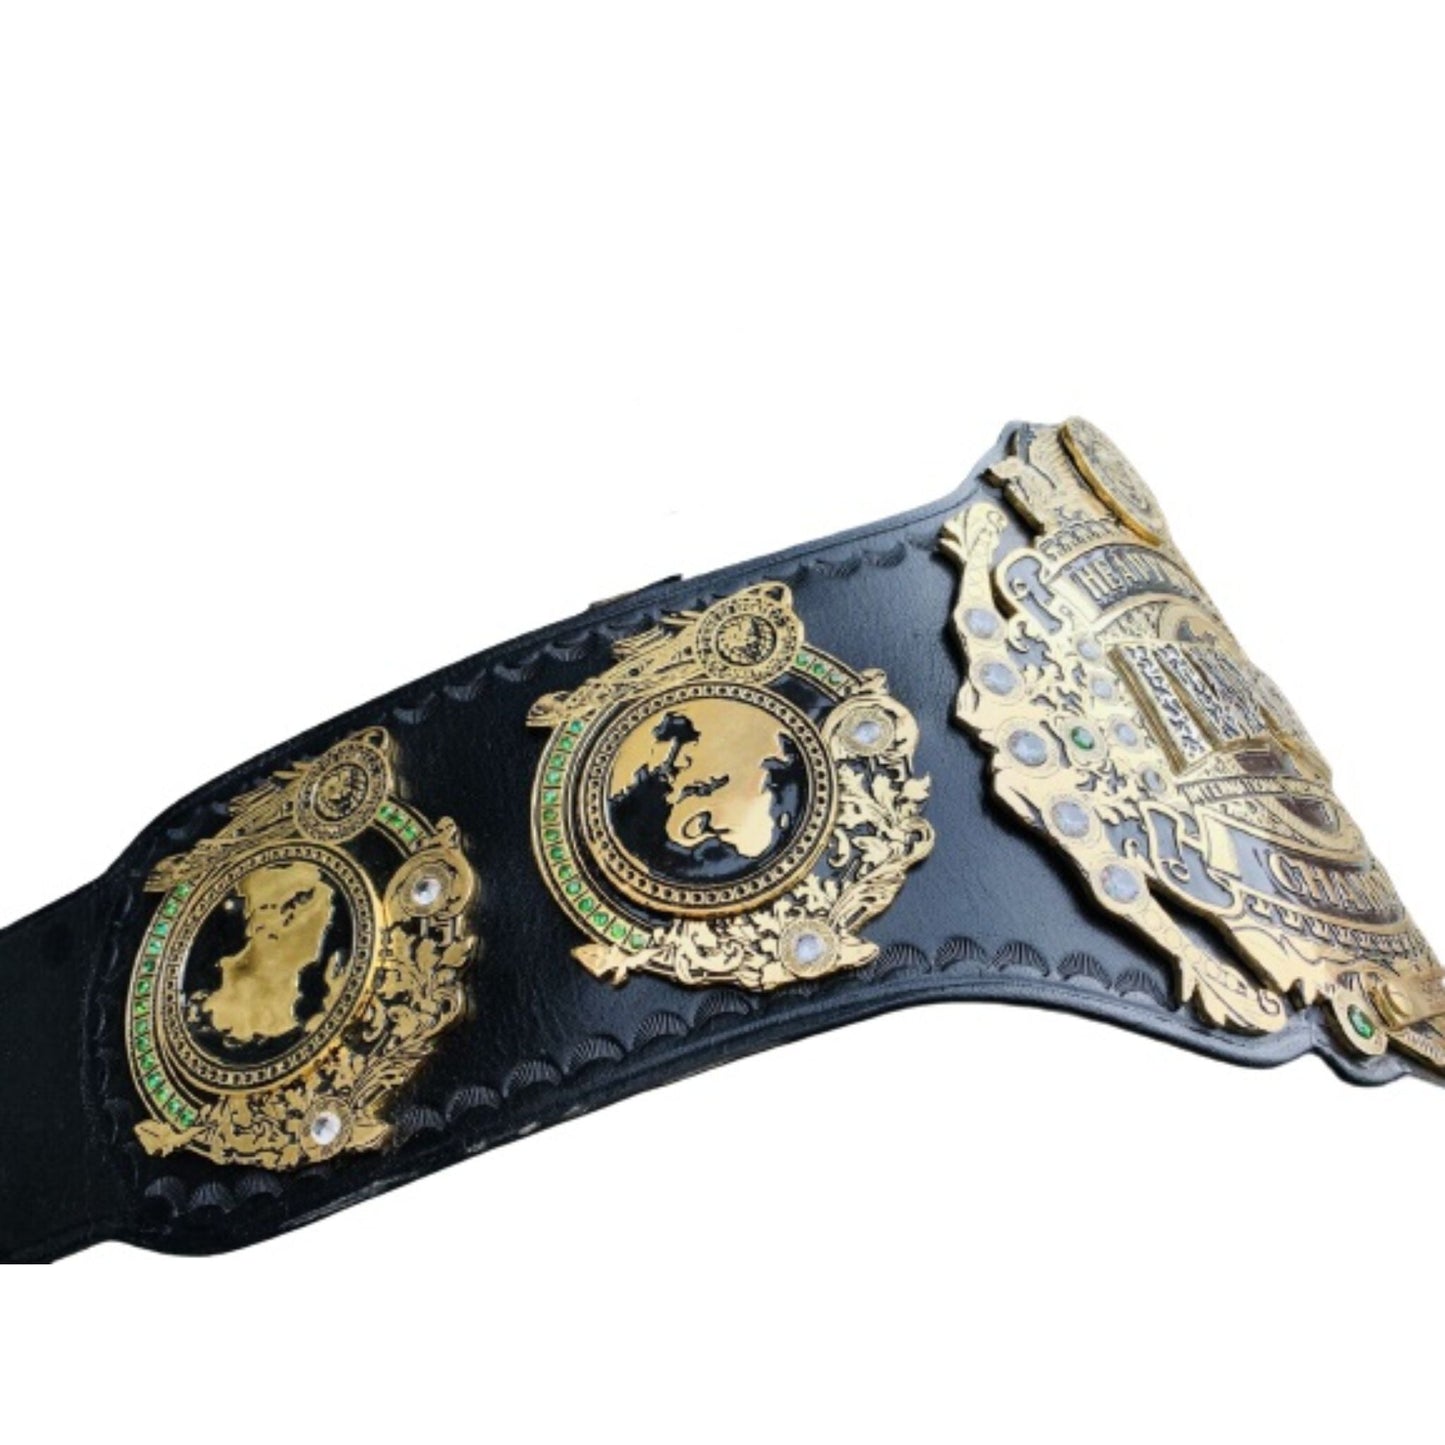 IWGP V5 Prototype heavyweight championship Replica Title Belt